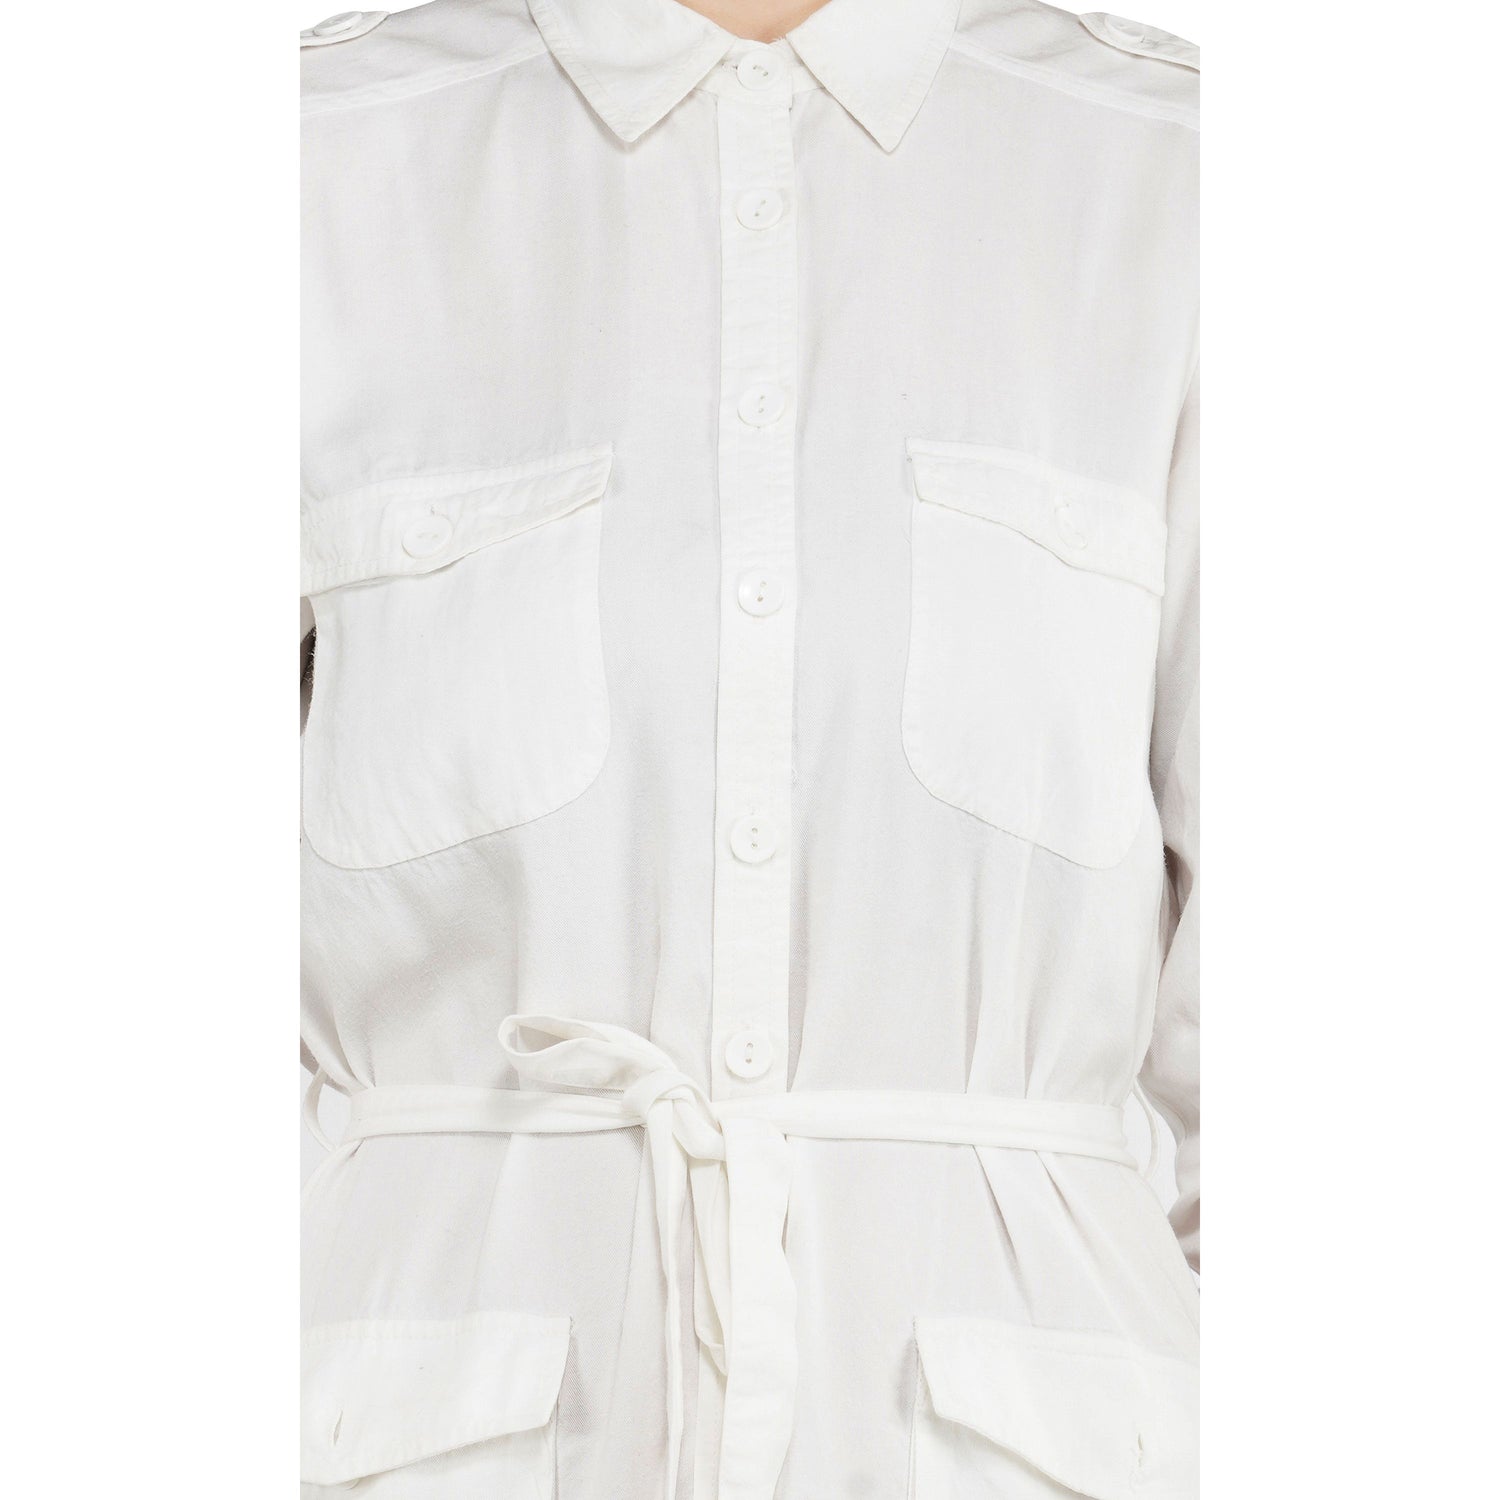 SLAY. Women's White Long Dress in Wrinkle Resistant Tencel Fabric-clothing-to-slay.myshopify.com-Dress